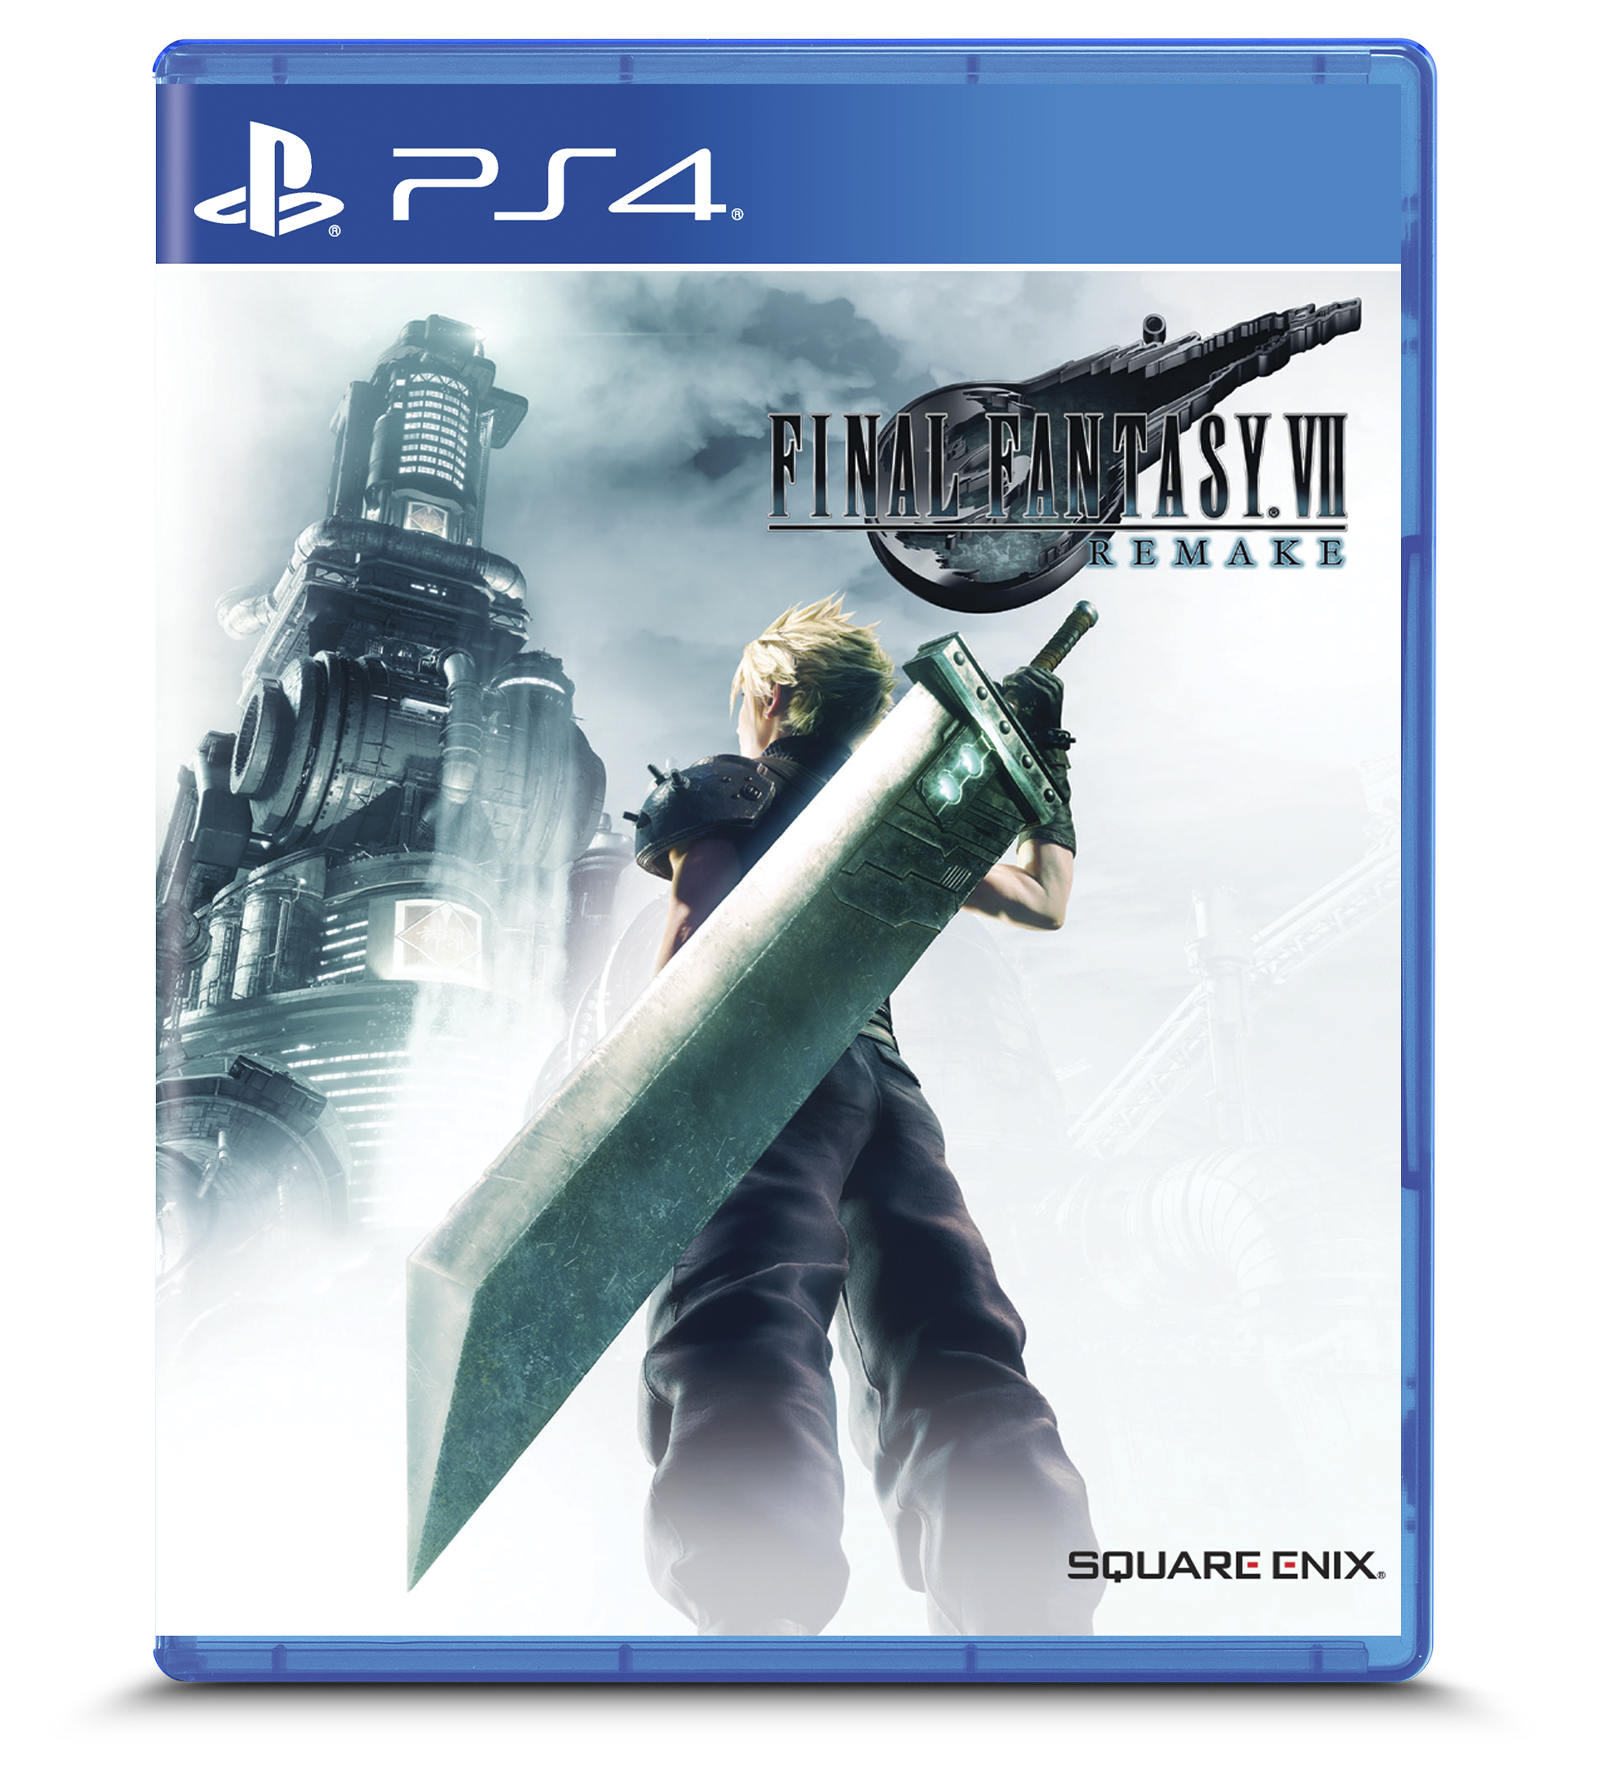 Final Fantasy VII Remake Play2022 deal